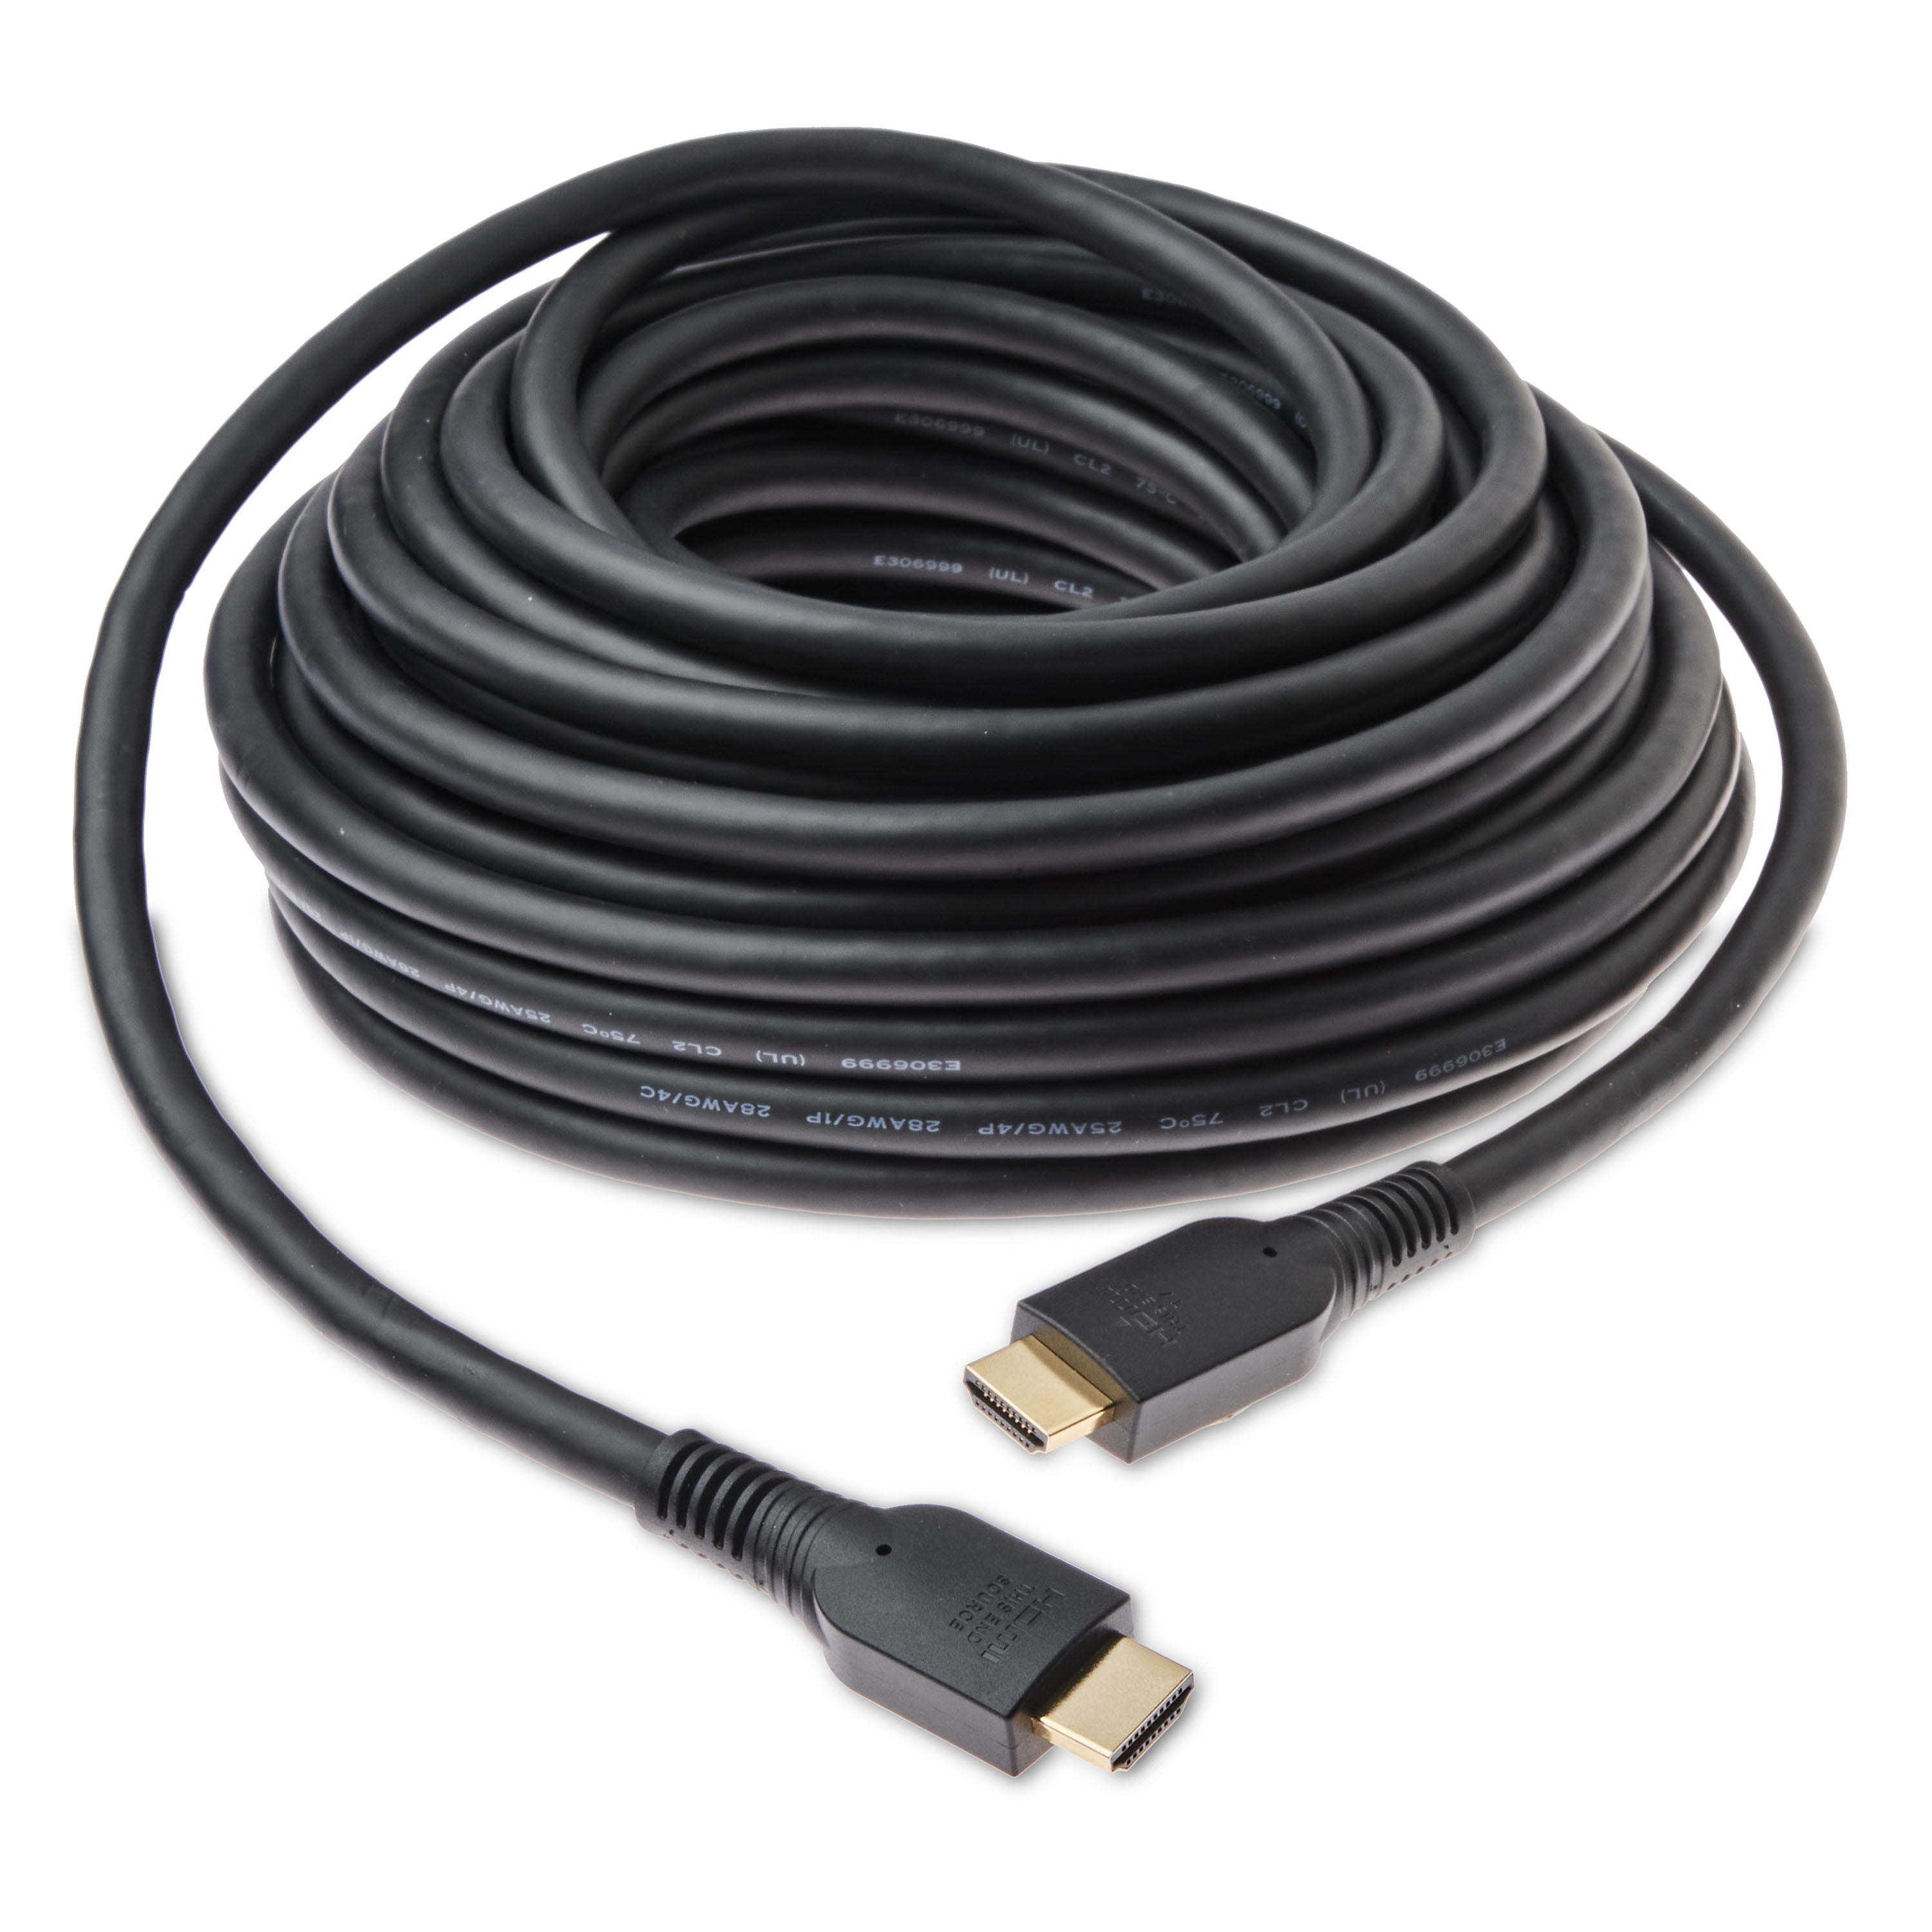 onn. 6' HDMI Cable, Black 